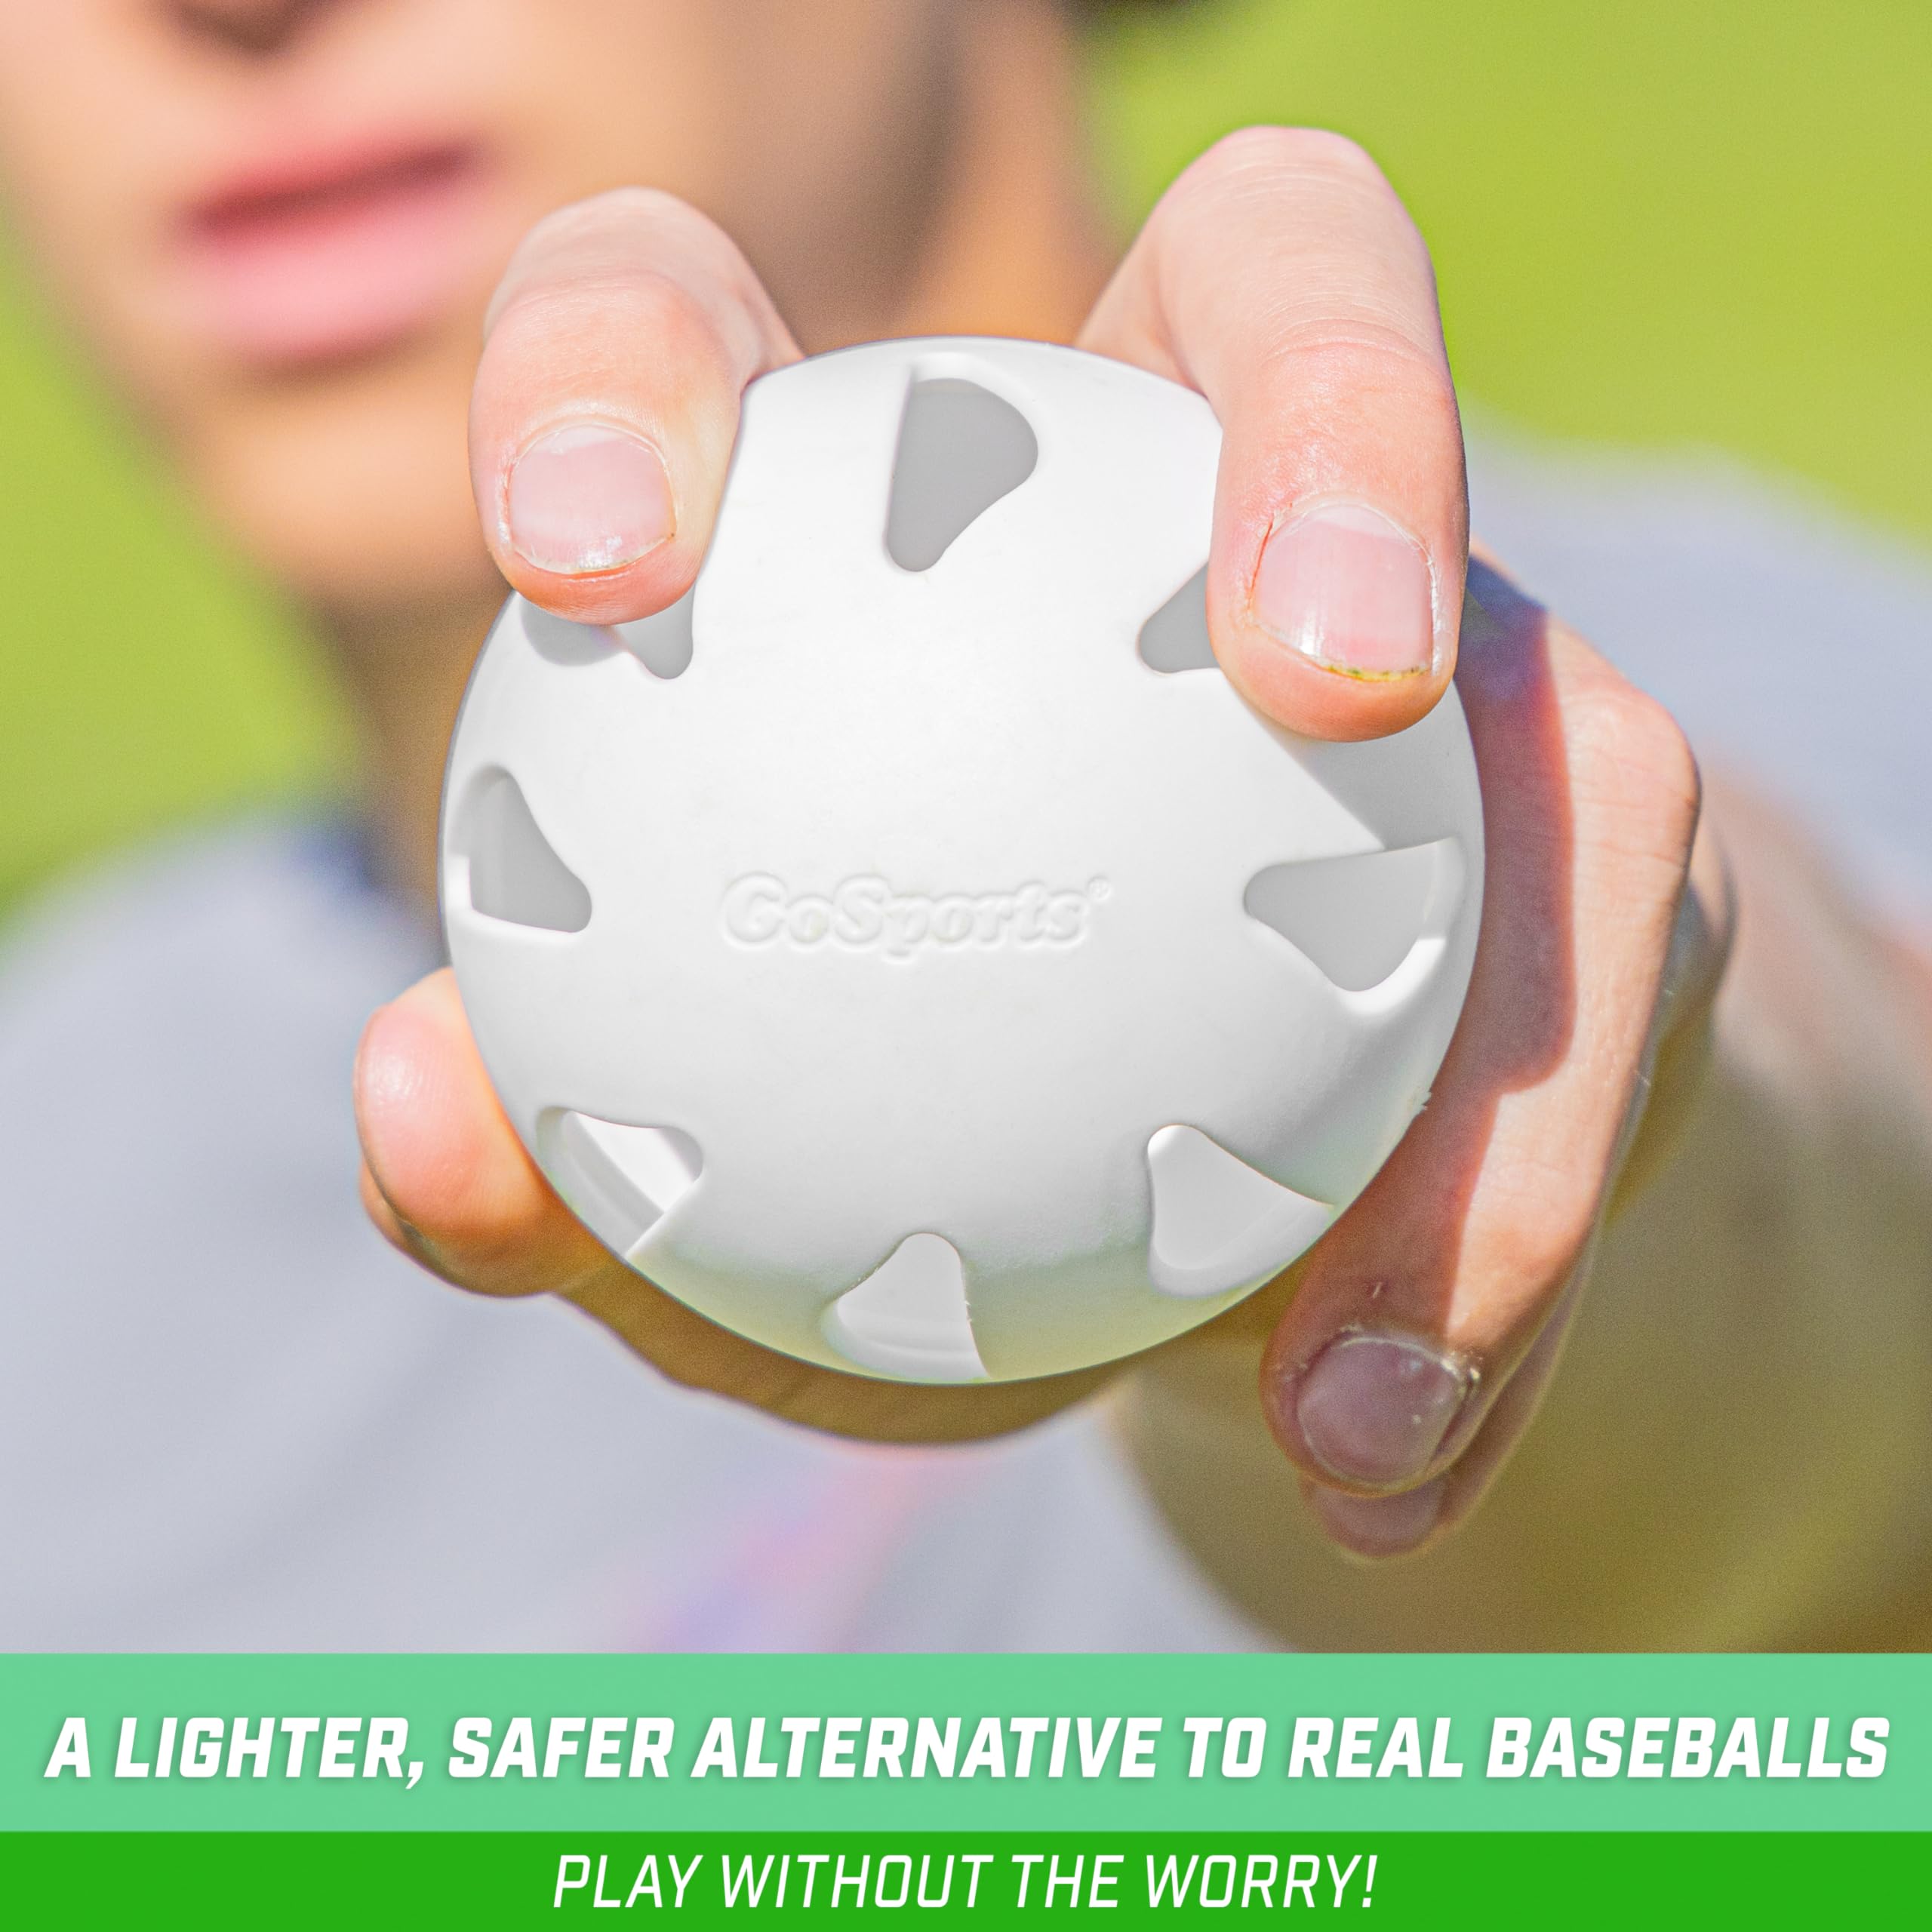 GoSports LotBall AIR Plastic Baseballs - 6 Pack